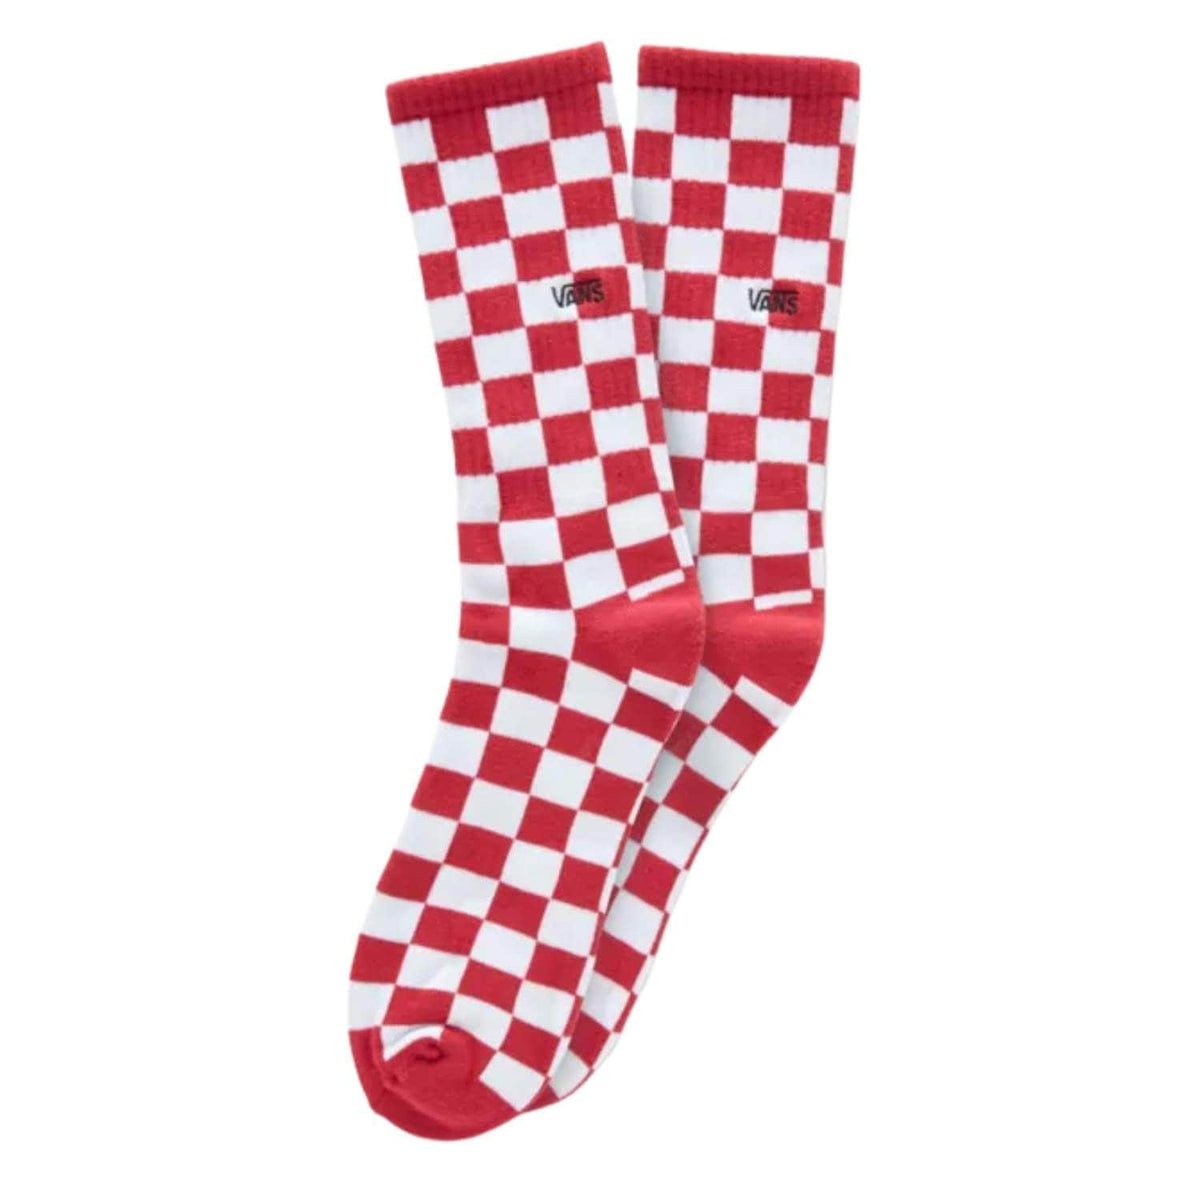 Vans Checkerboard Crew Socks - Red/White